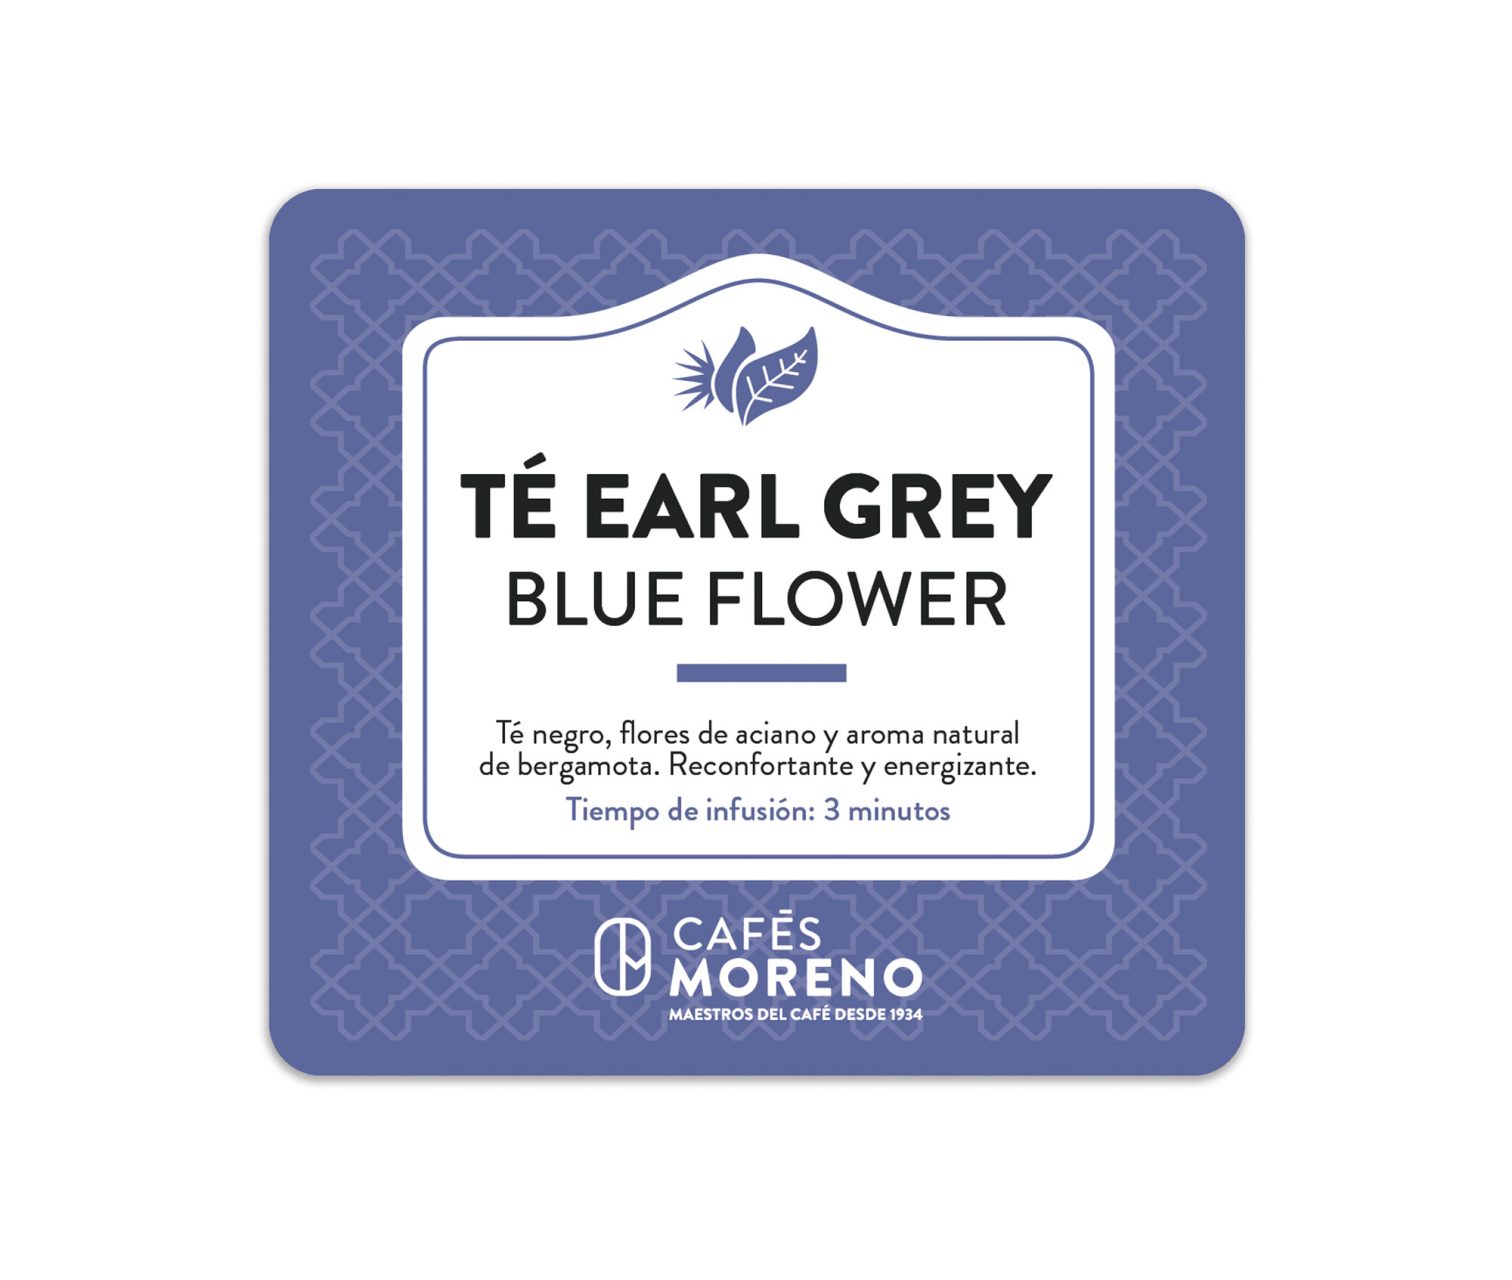 Etiqueta te earl grey blue flower